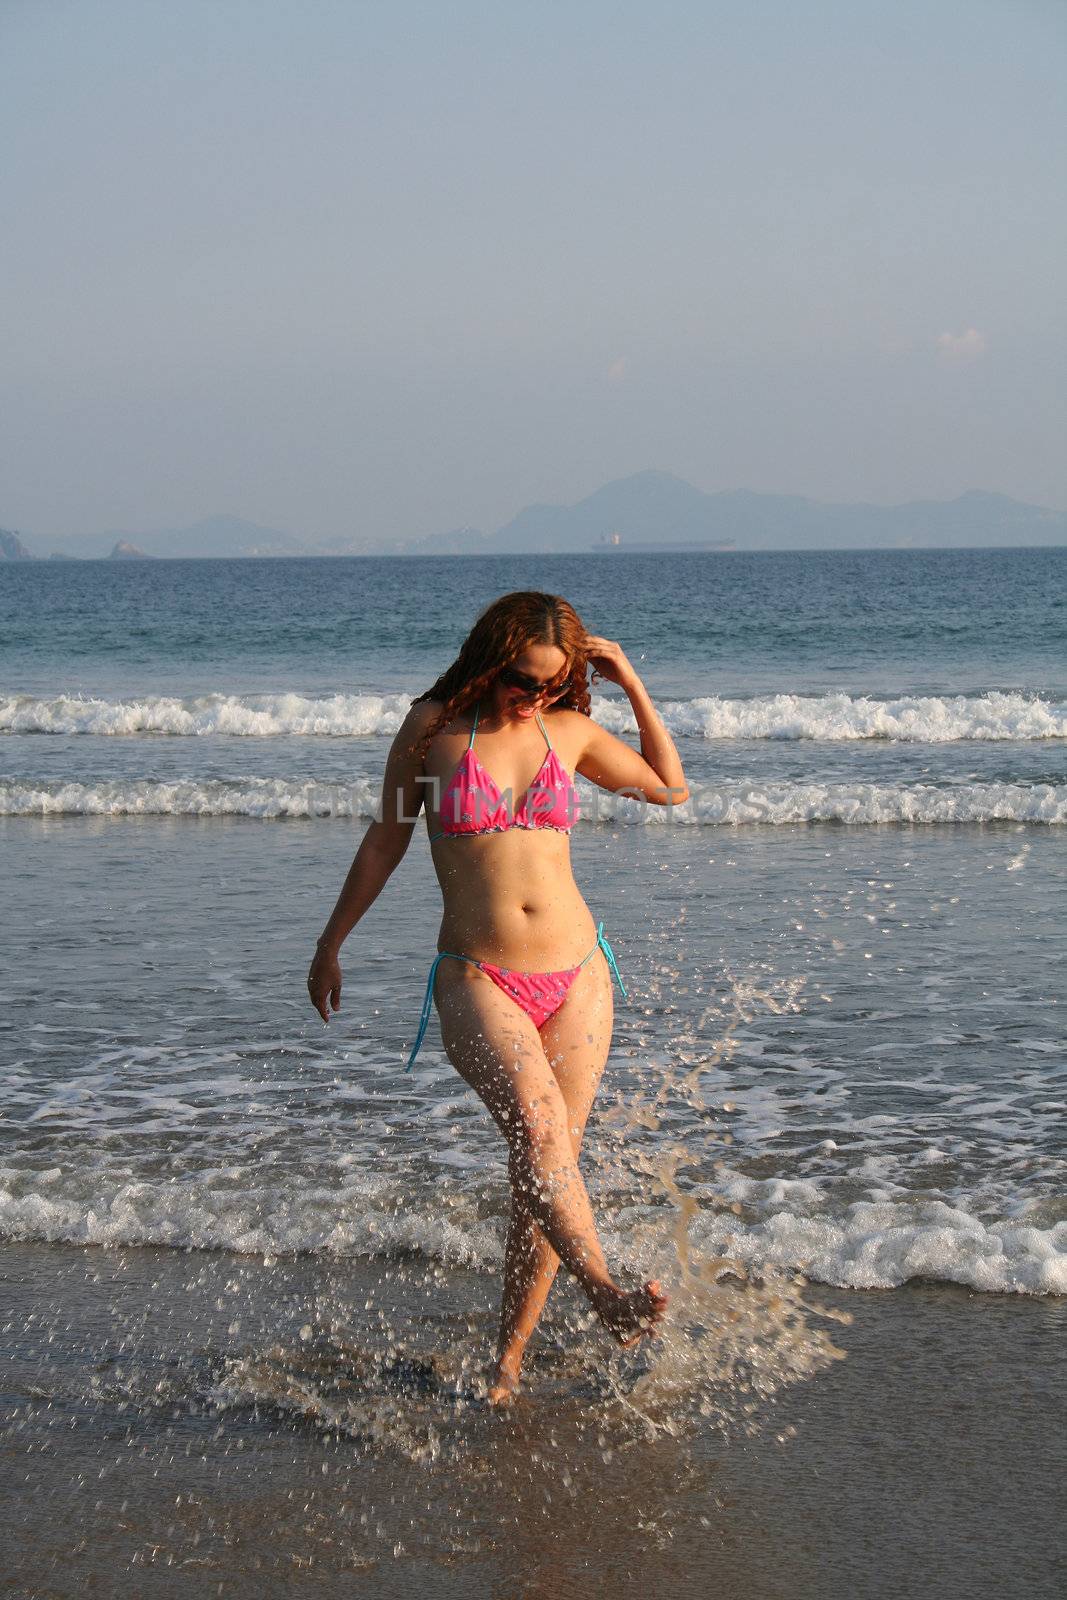 Beautiful young woman on beach